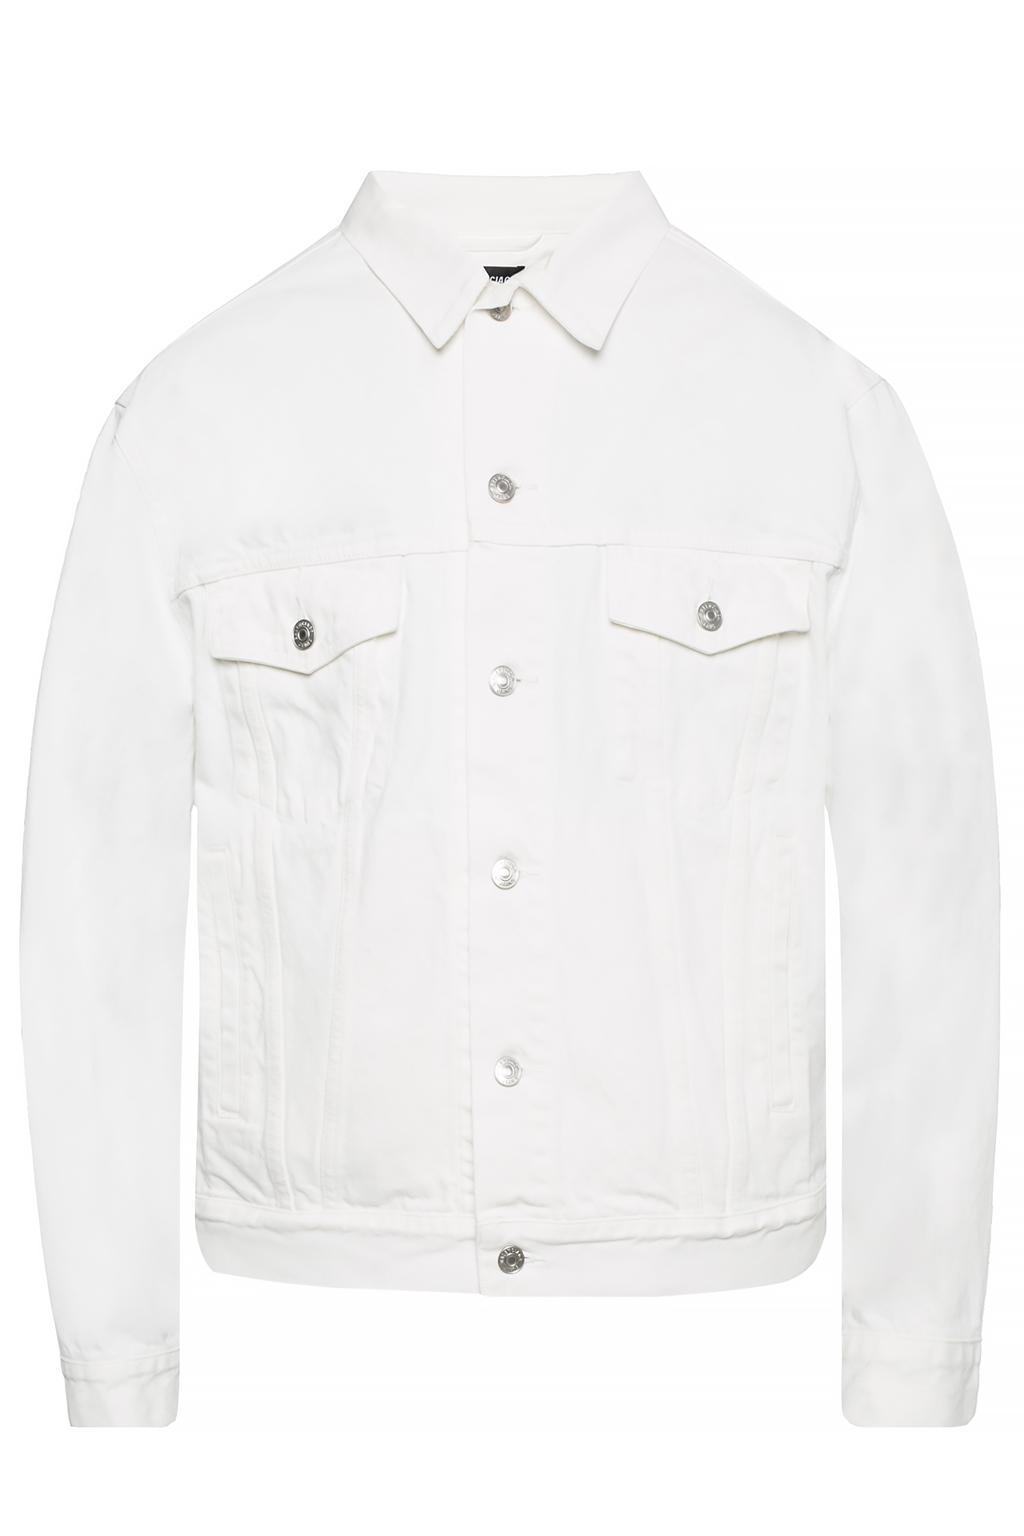 Balenciaga Denim Jacket With Logo in White for Men - Lyst